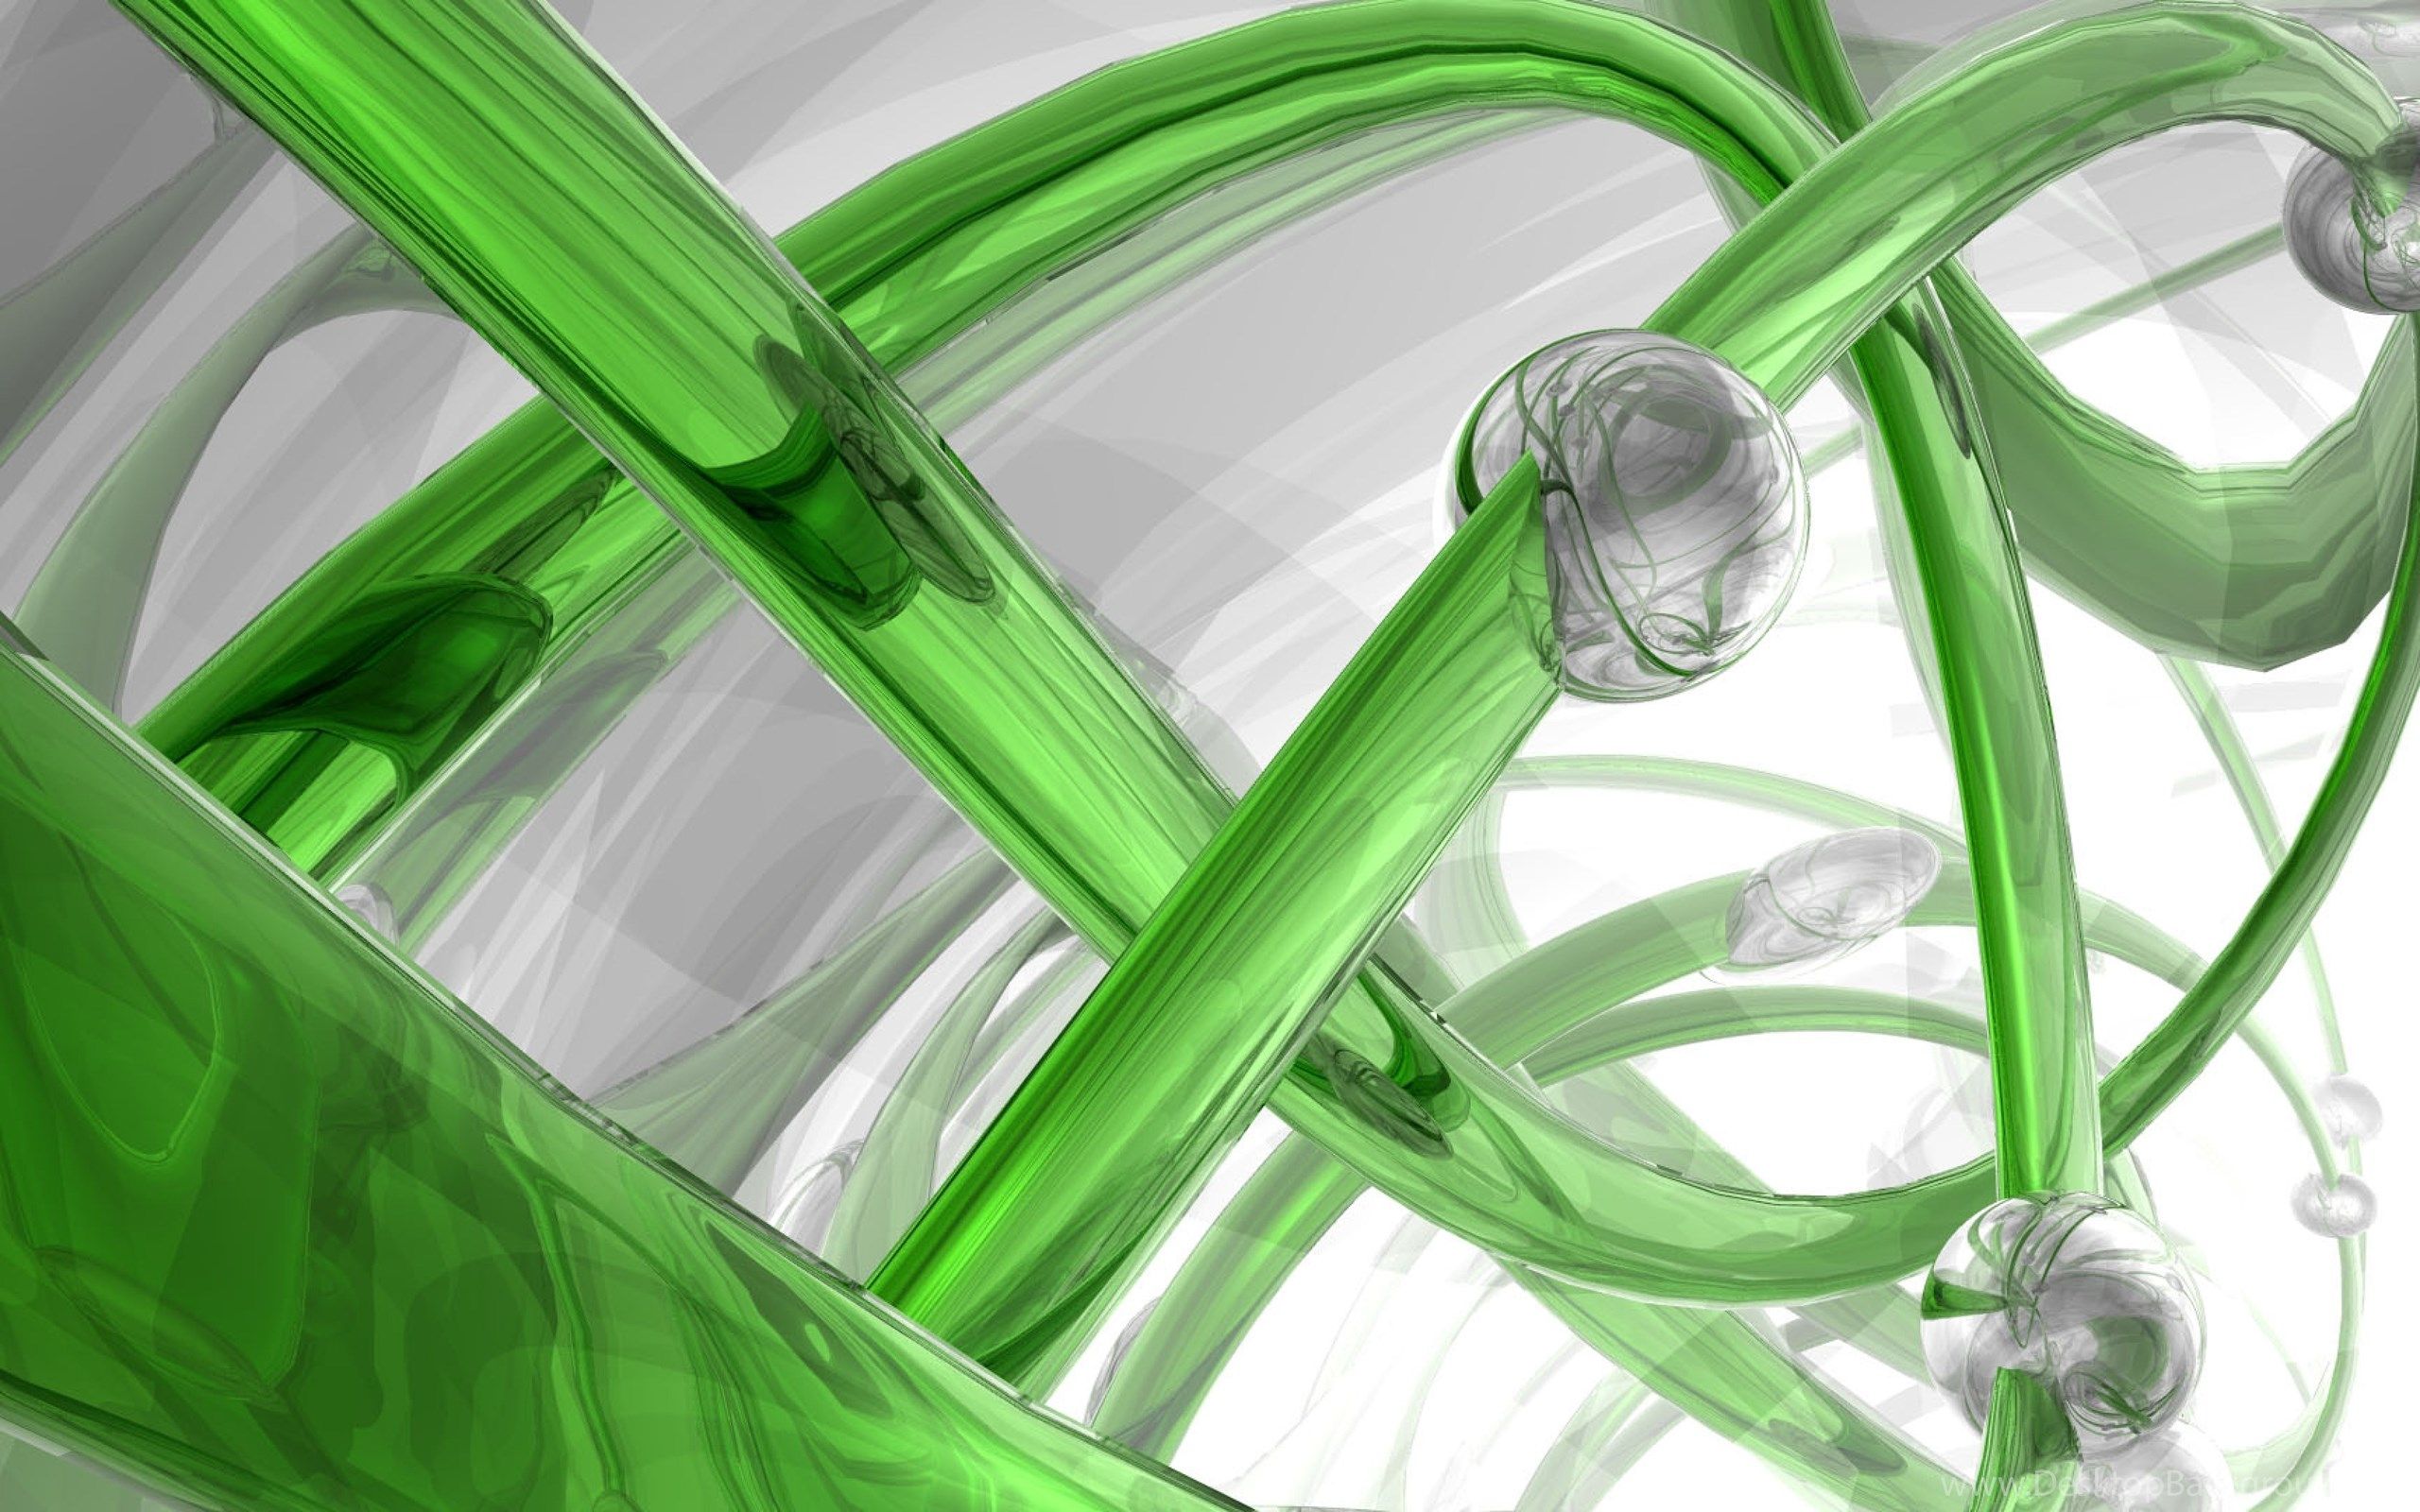 Download Wallpaper 3840x2160 3D, Spiral, Glass, Green, White 4K. Desktop Background